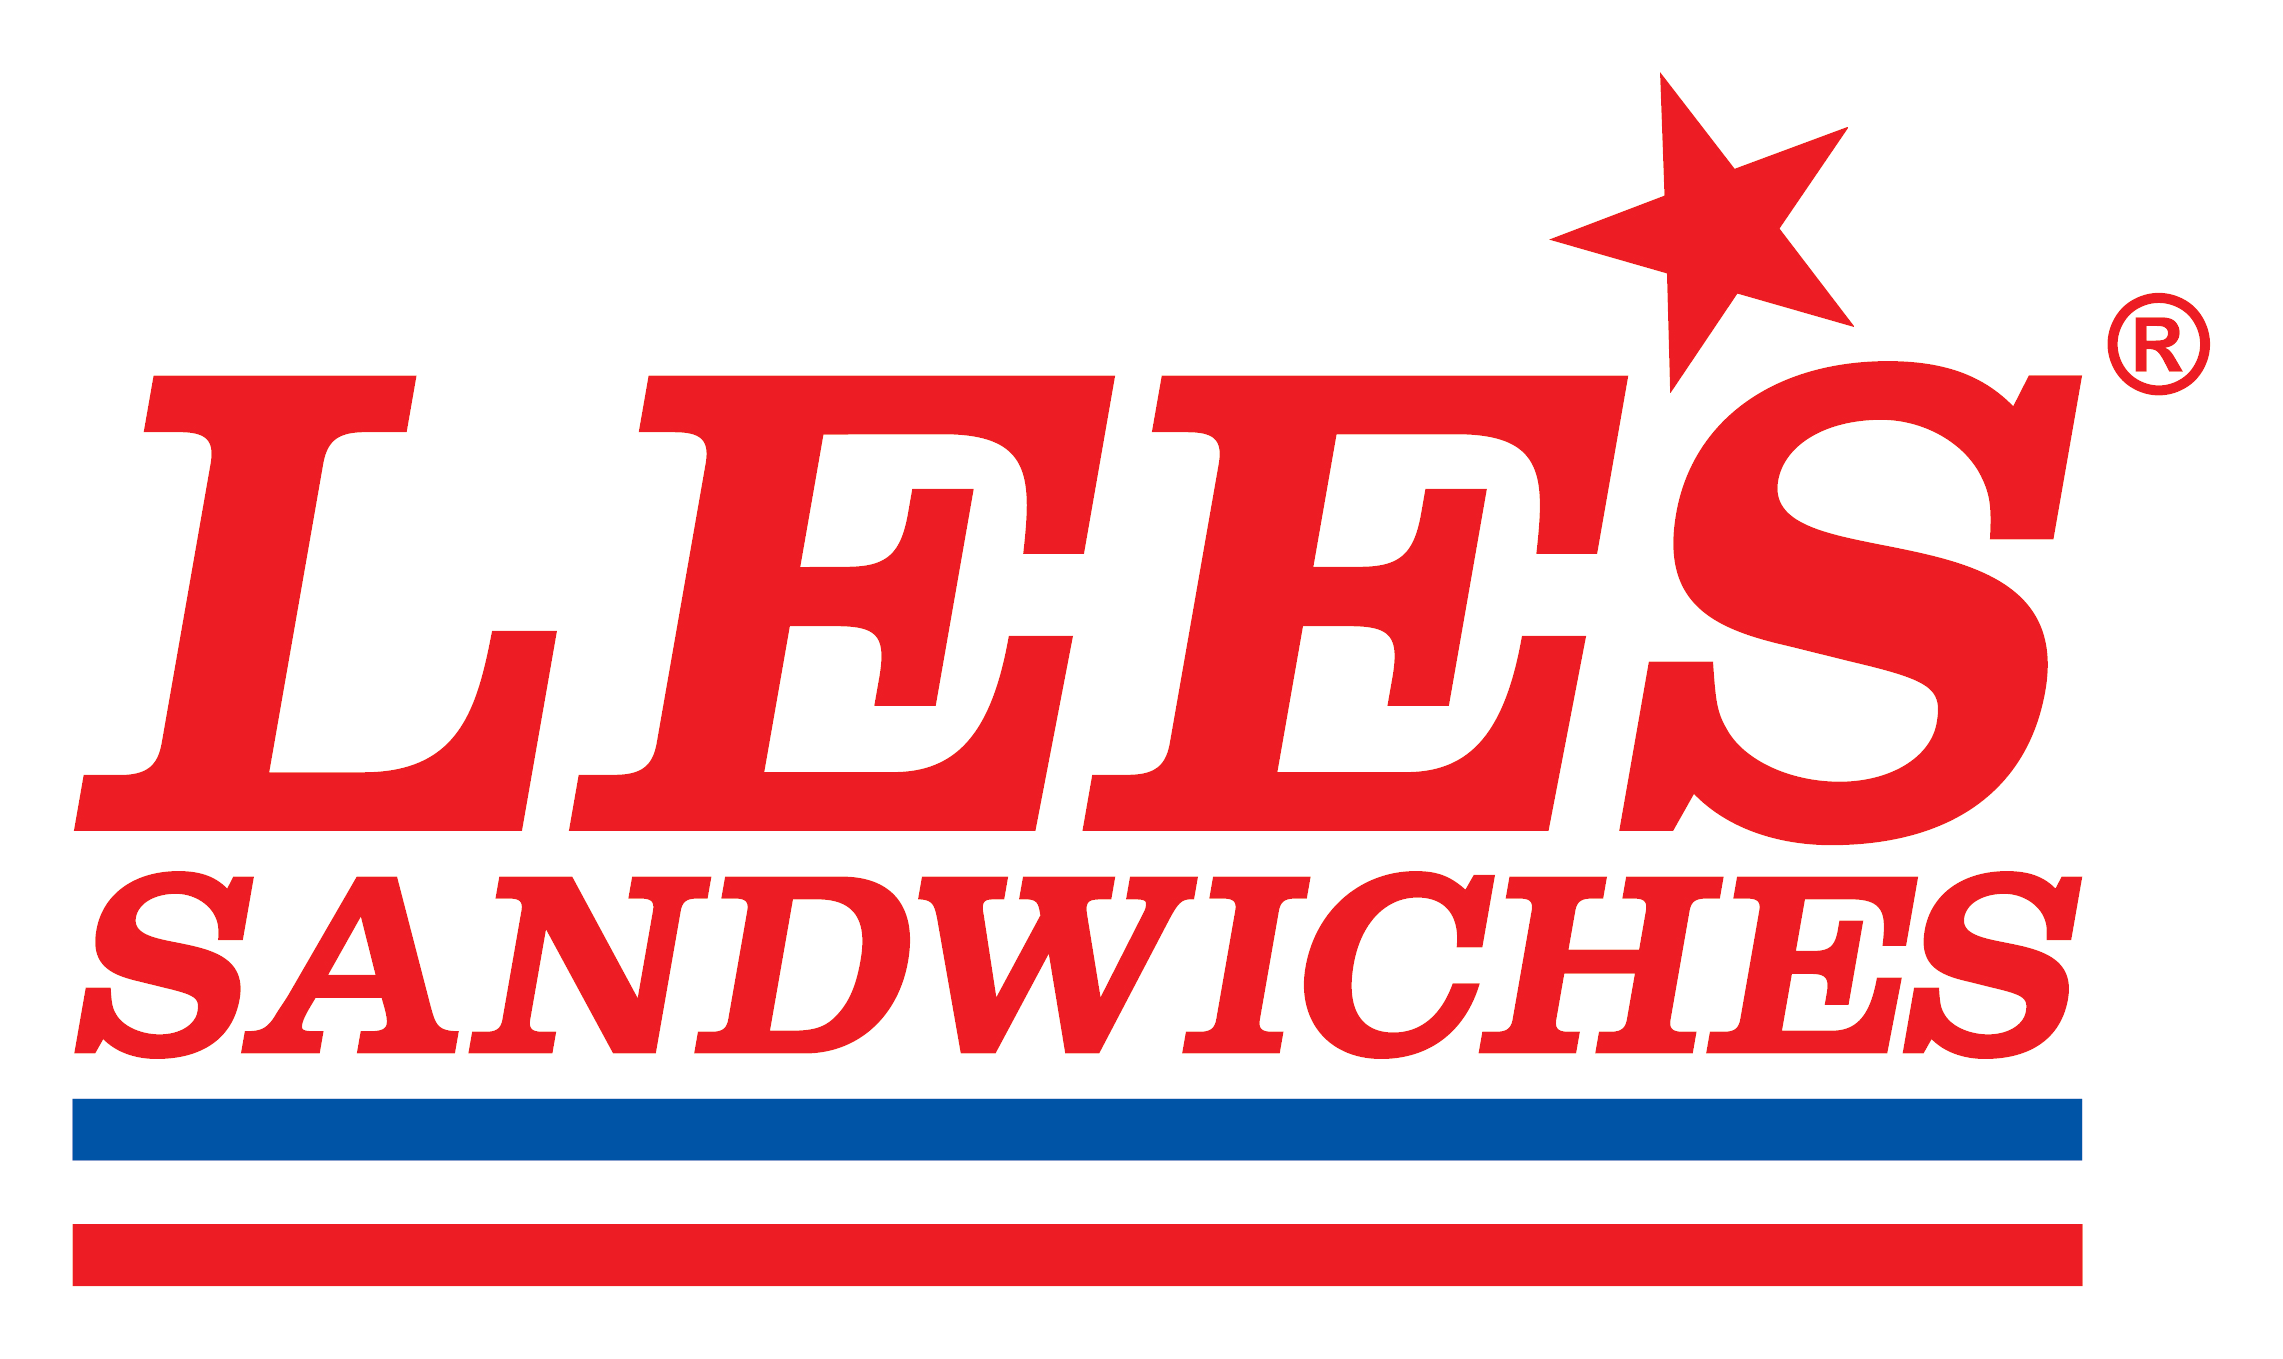 Lee's Sandwiches Dublin